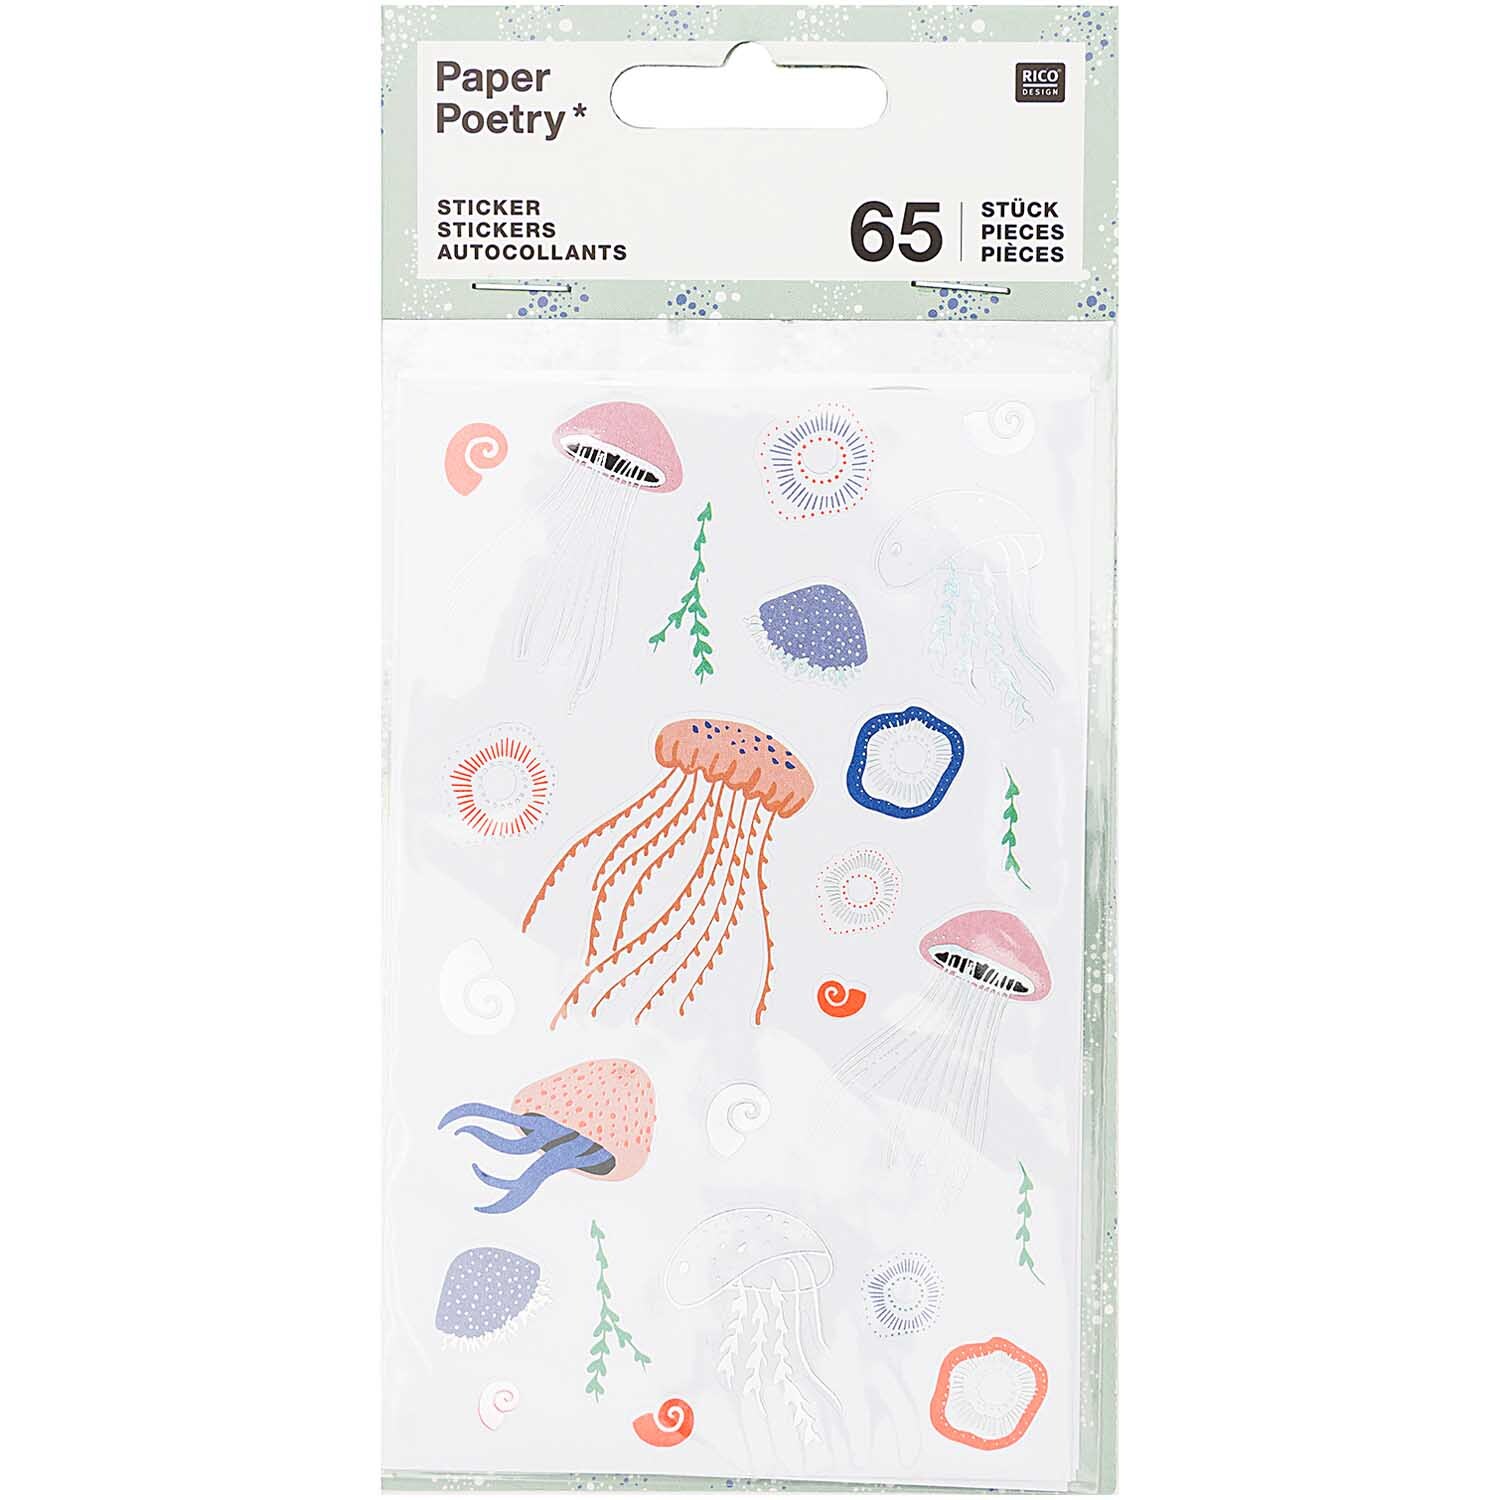 Paper Poetry Sticker Mermaid Quallen 65 Stück